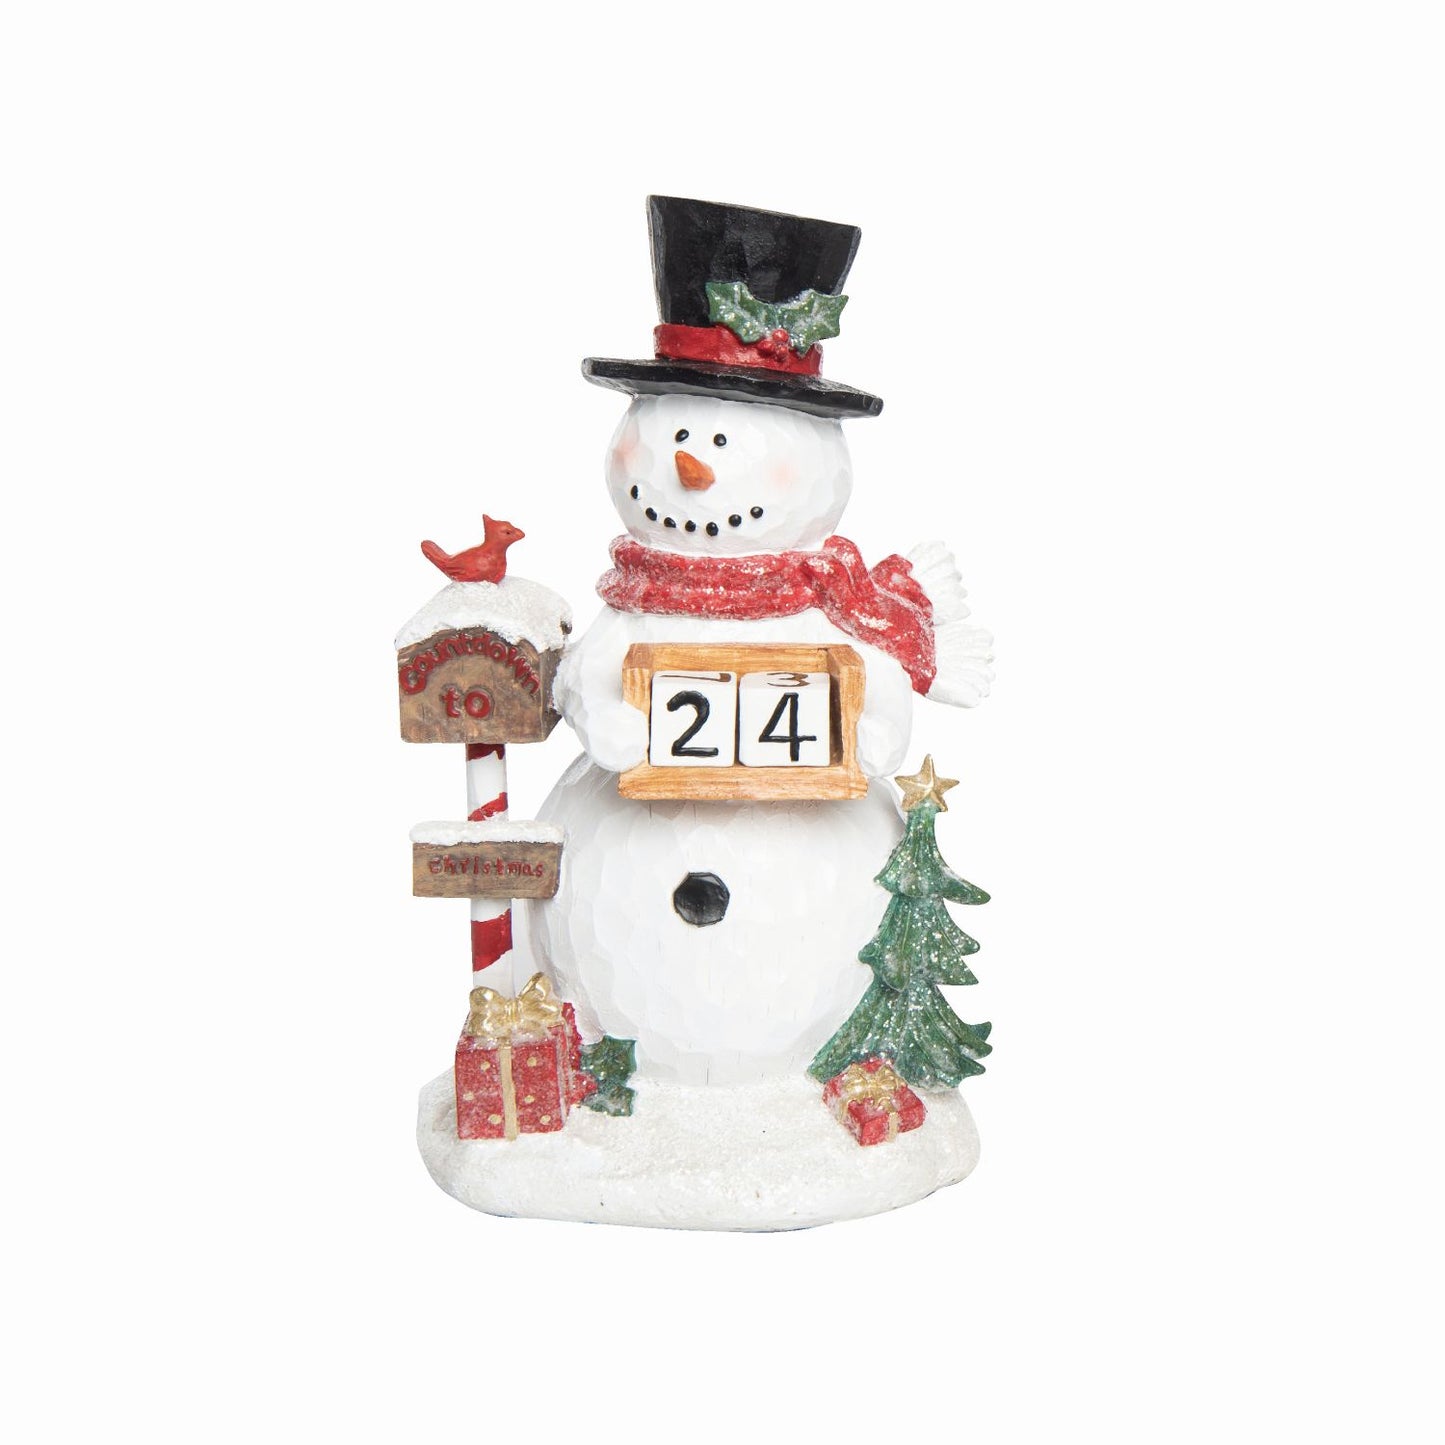 Transpac Resin Snowman Christmas Countdown With Blocks